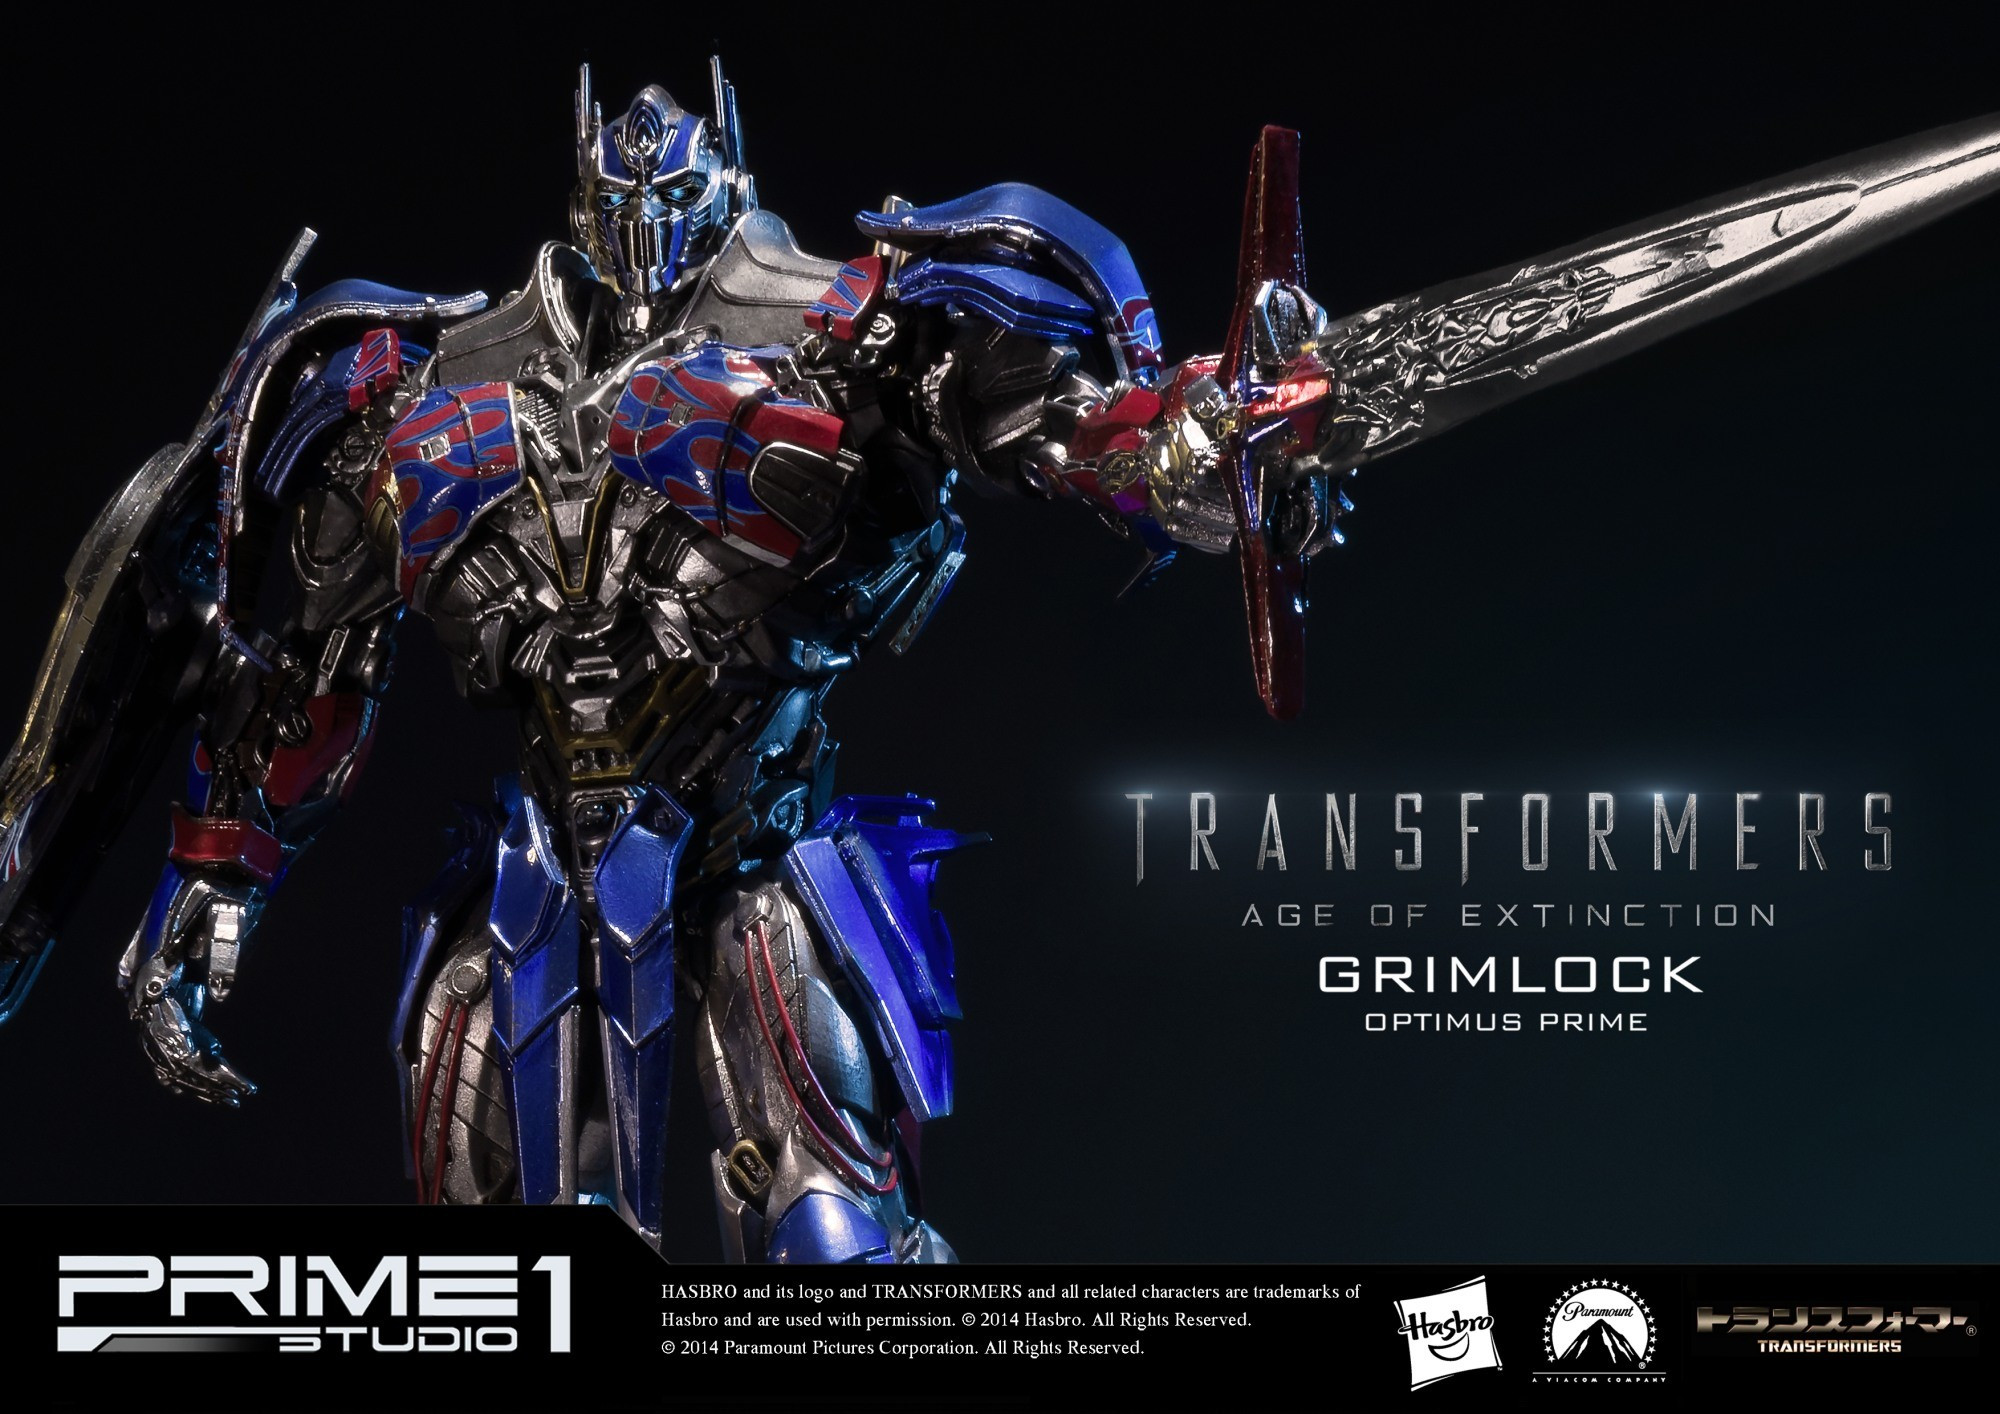 First prime. Prime Studio 1 Transformers 1 Оптимус Прайм. Prime 1 Studio : Grimlock Optimus Prime Statue. Prime 1 Studio Transformers age of Extinction Optimus Prime. Prime 1 Studio Transformers age of Extinction.